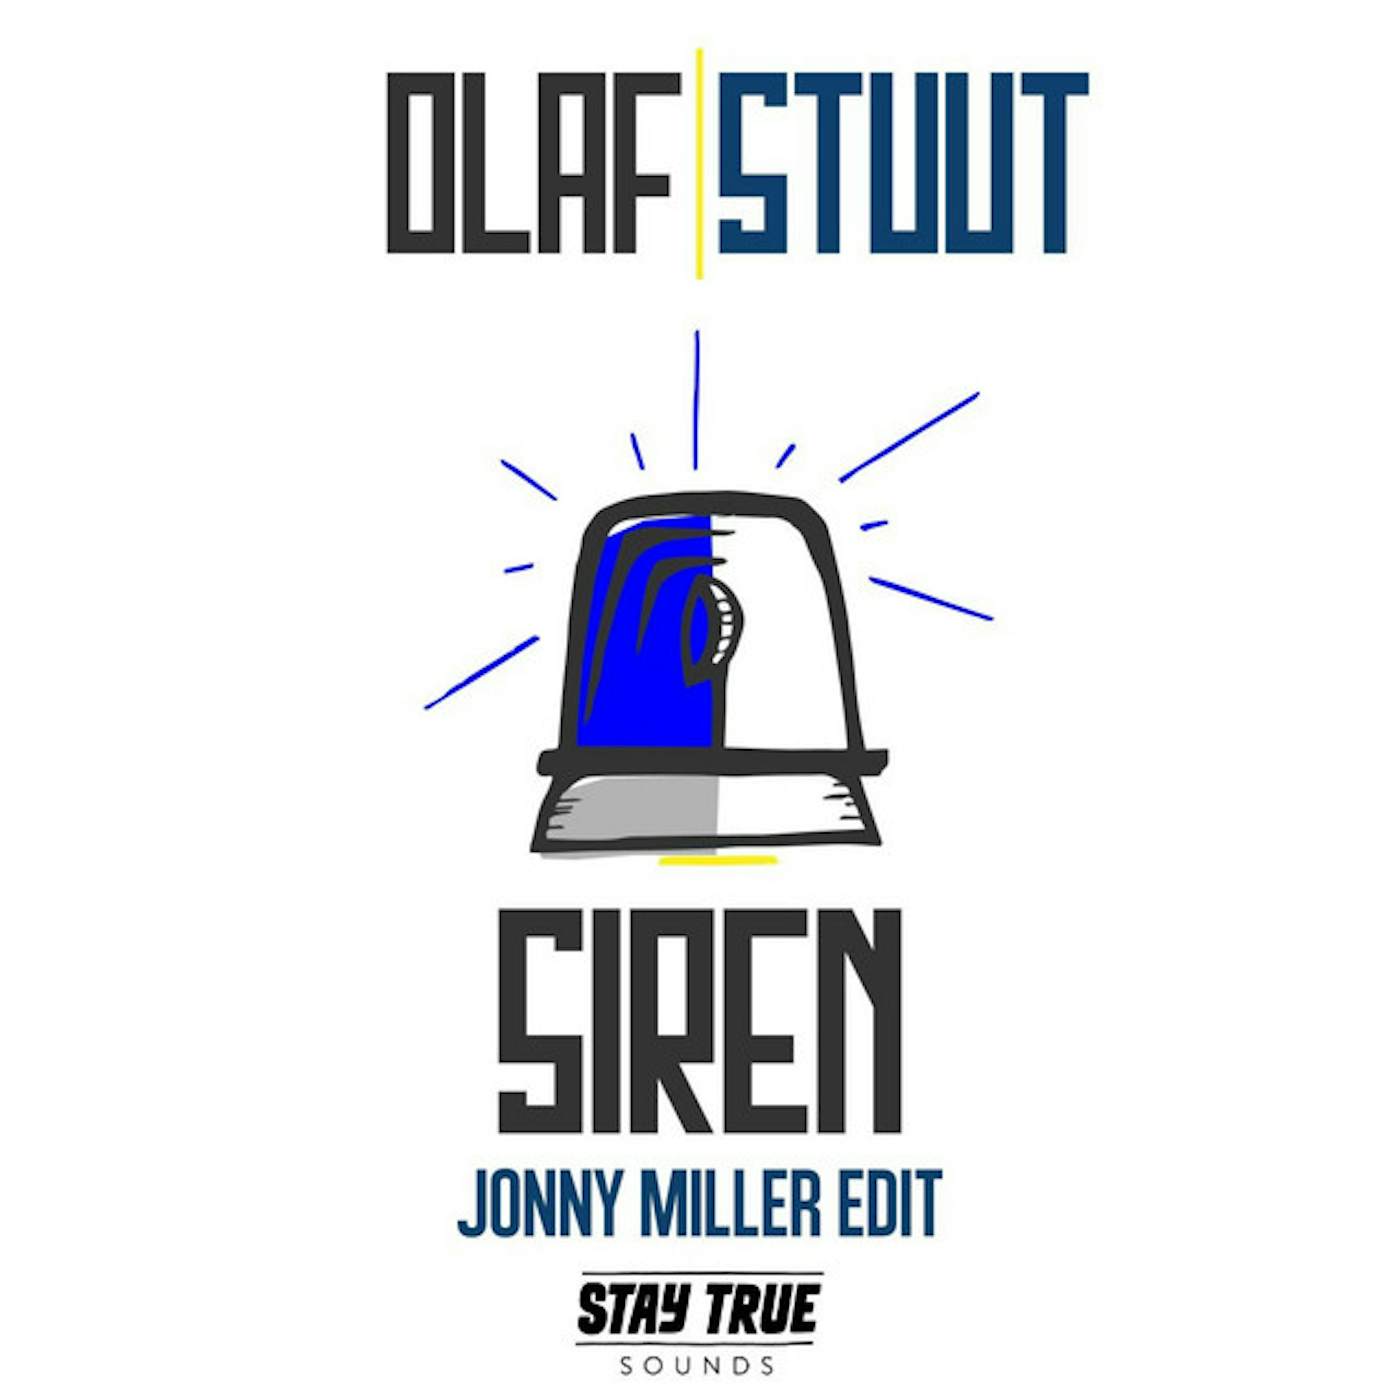 Olaf Stuut Siren Vinyl Record